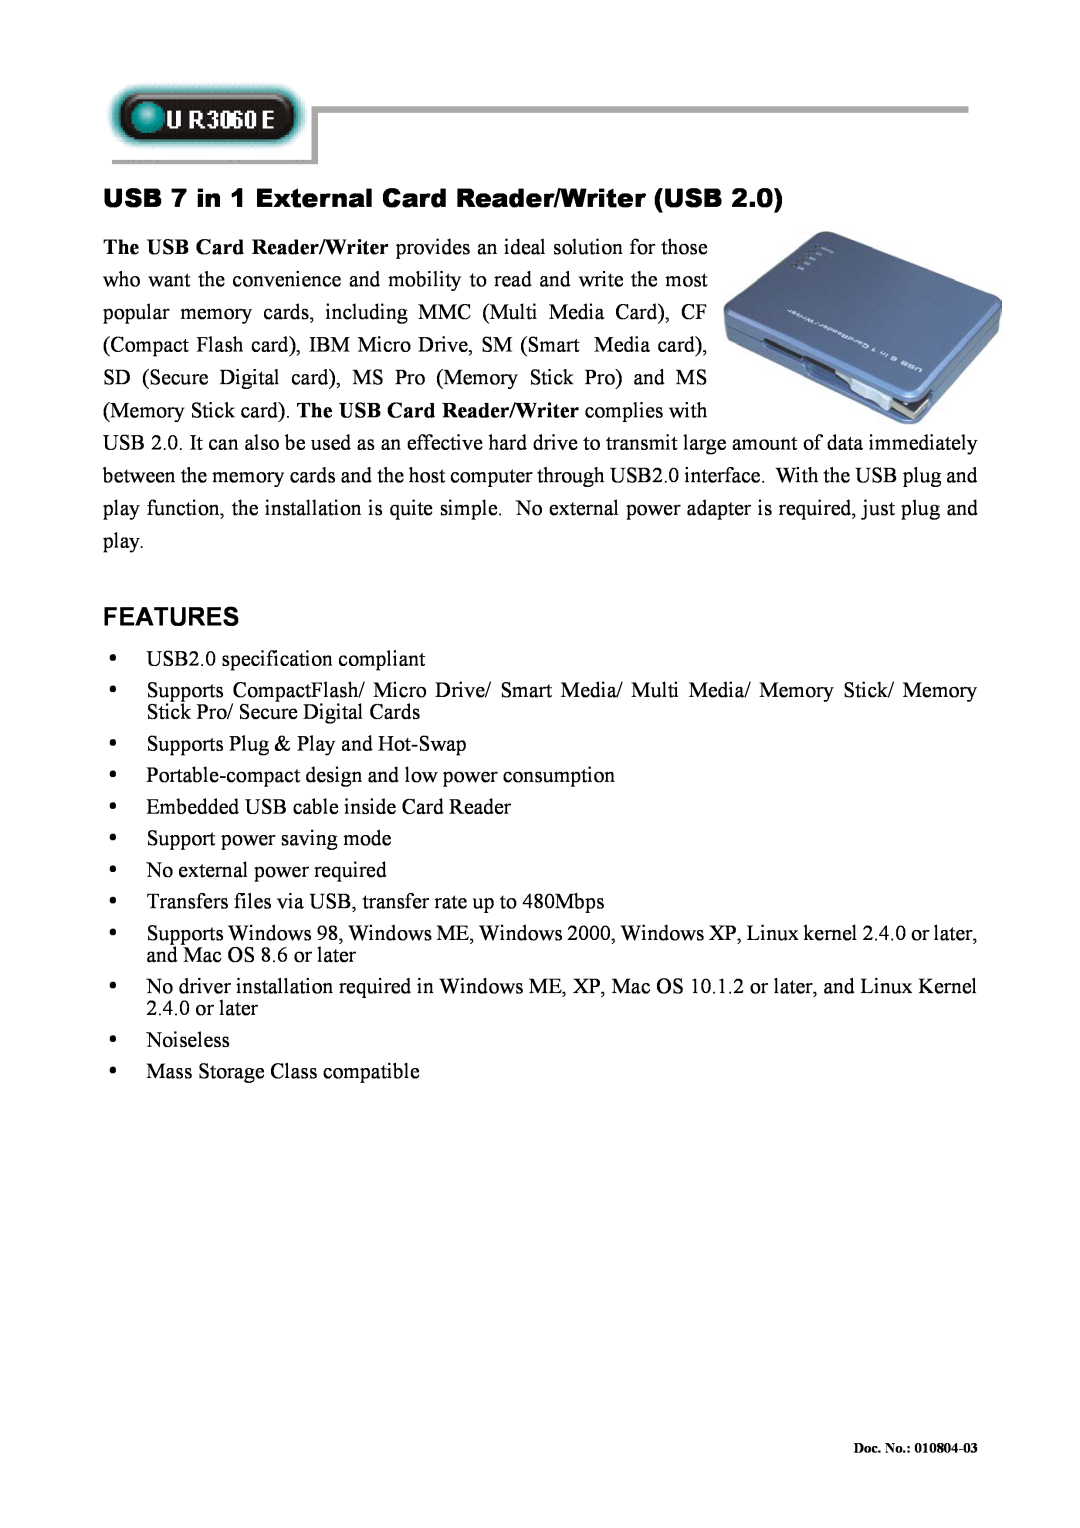 Abocom UR3060E manual USB 7 in 1 External Card Reader/Writer USB, Features 